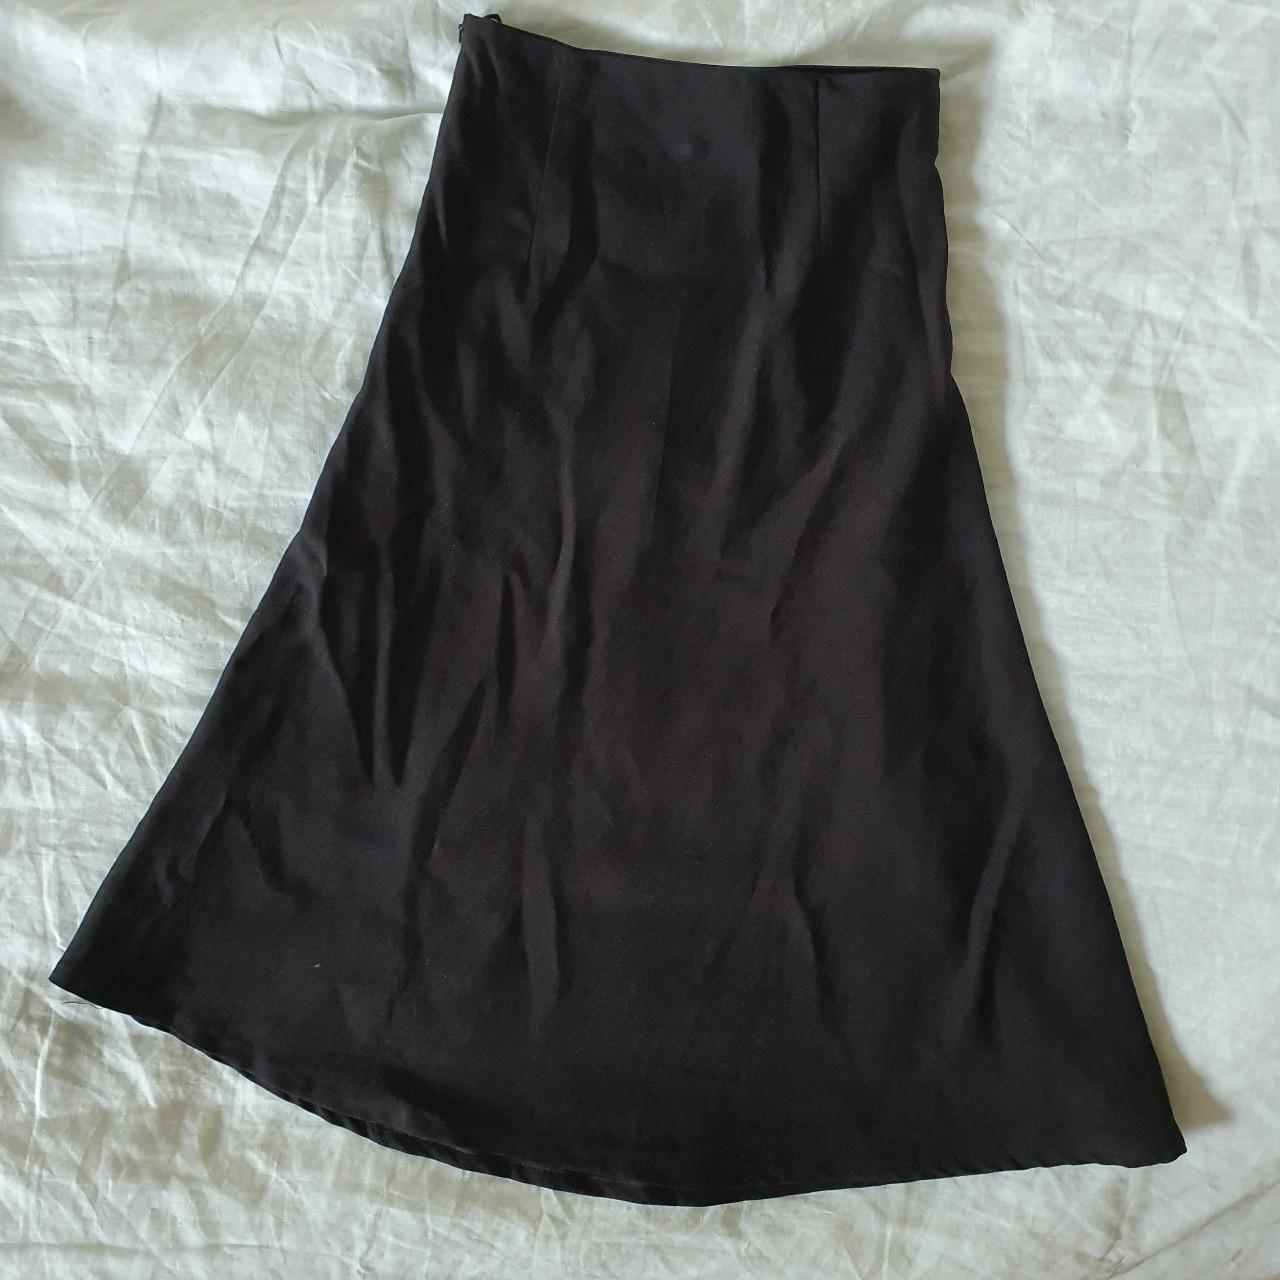 Black midi skirt // Classic skirt with a long a-line... - Depop